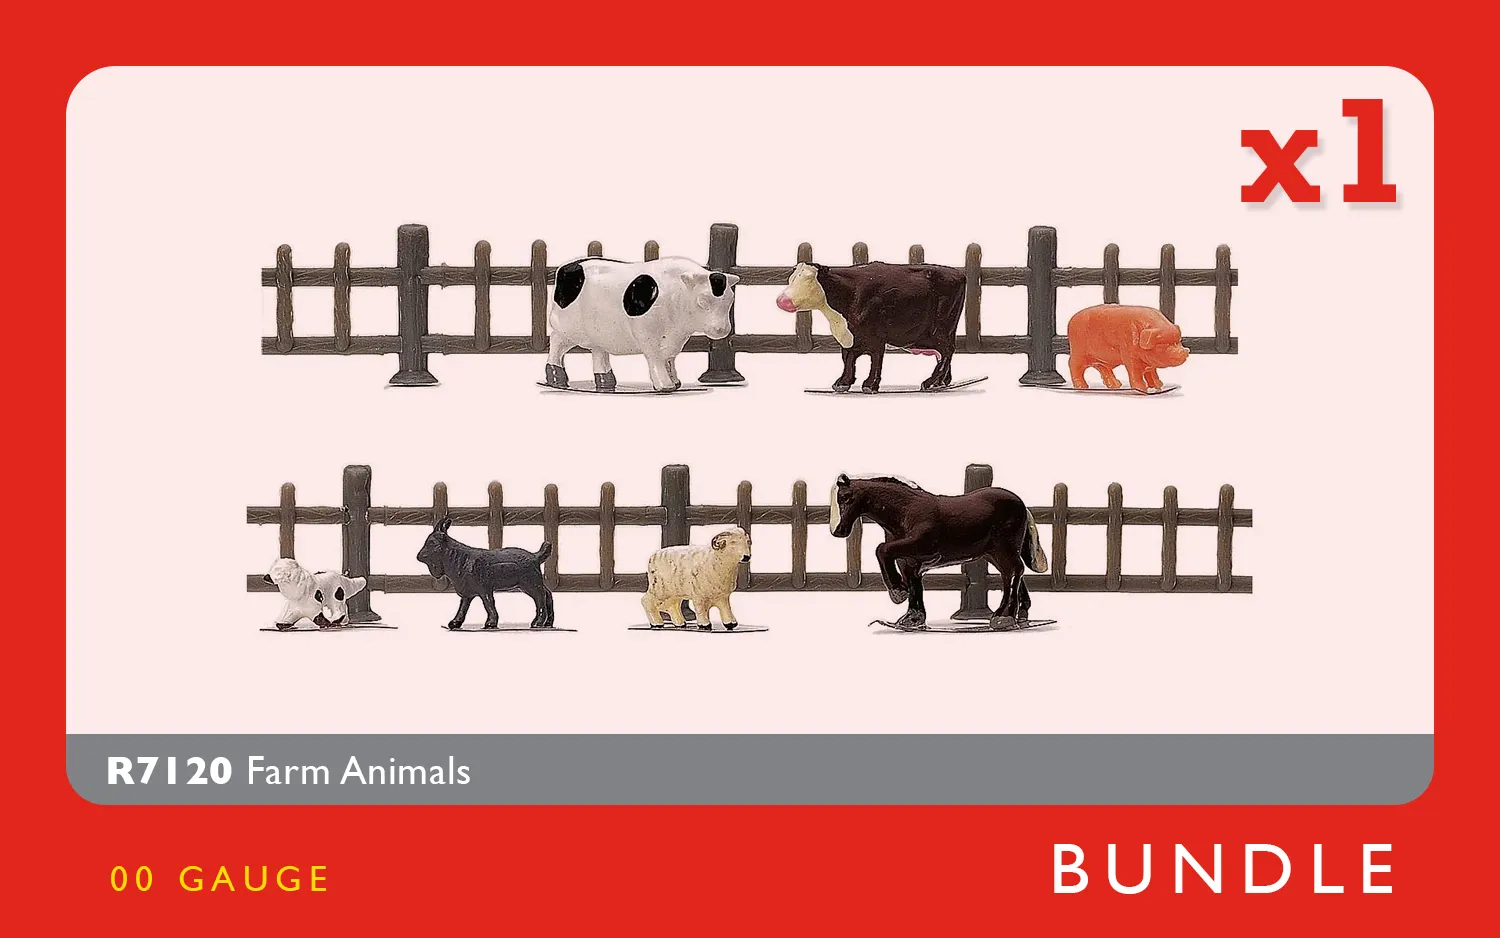 People & Animals Accessory Bundle